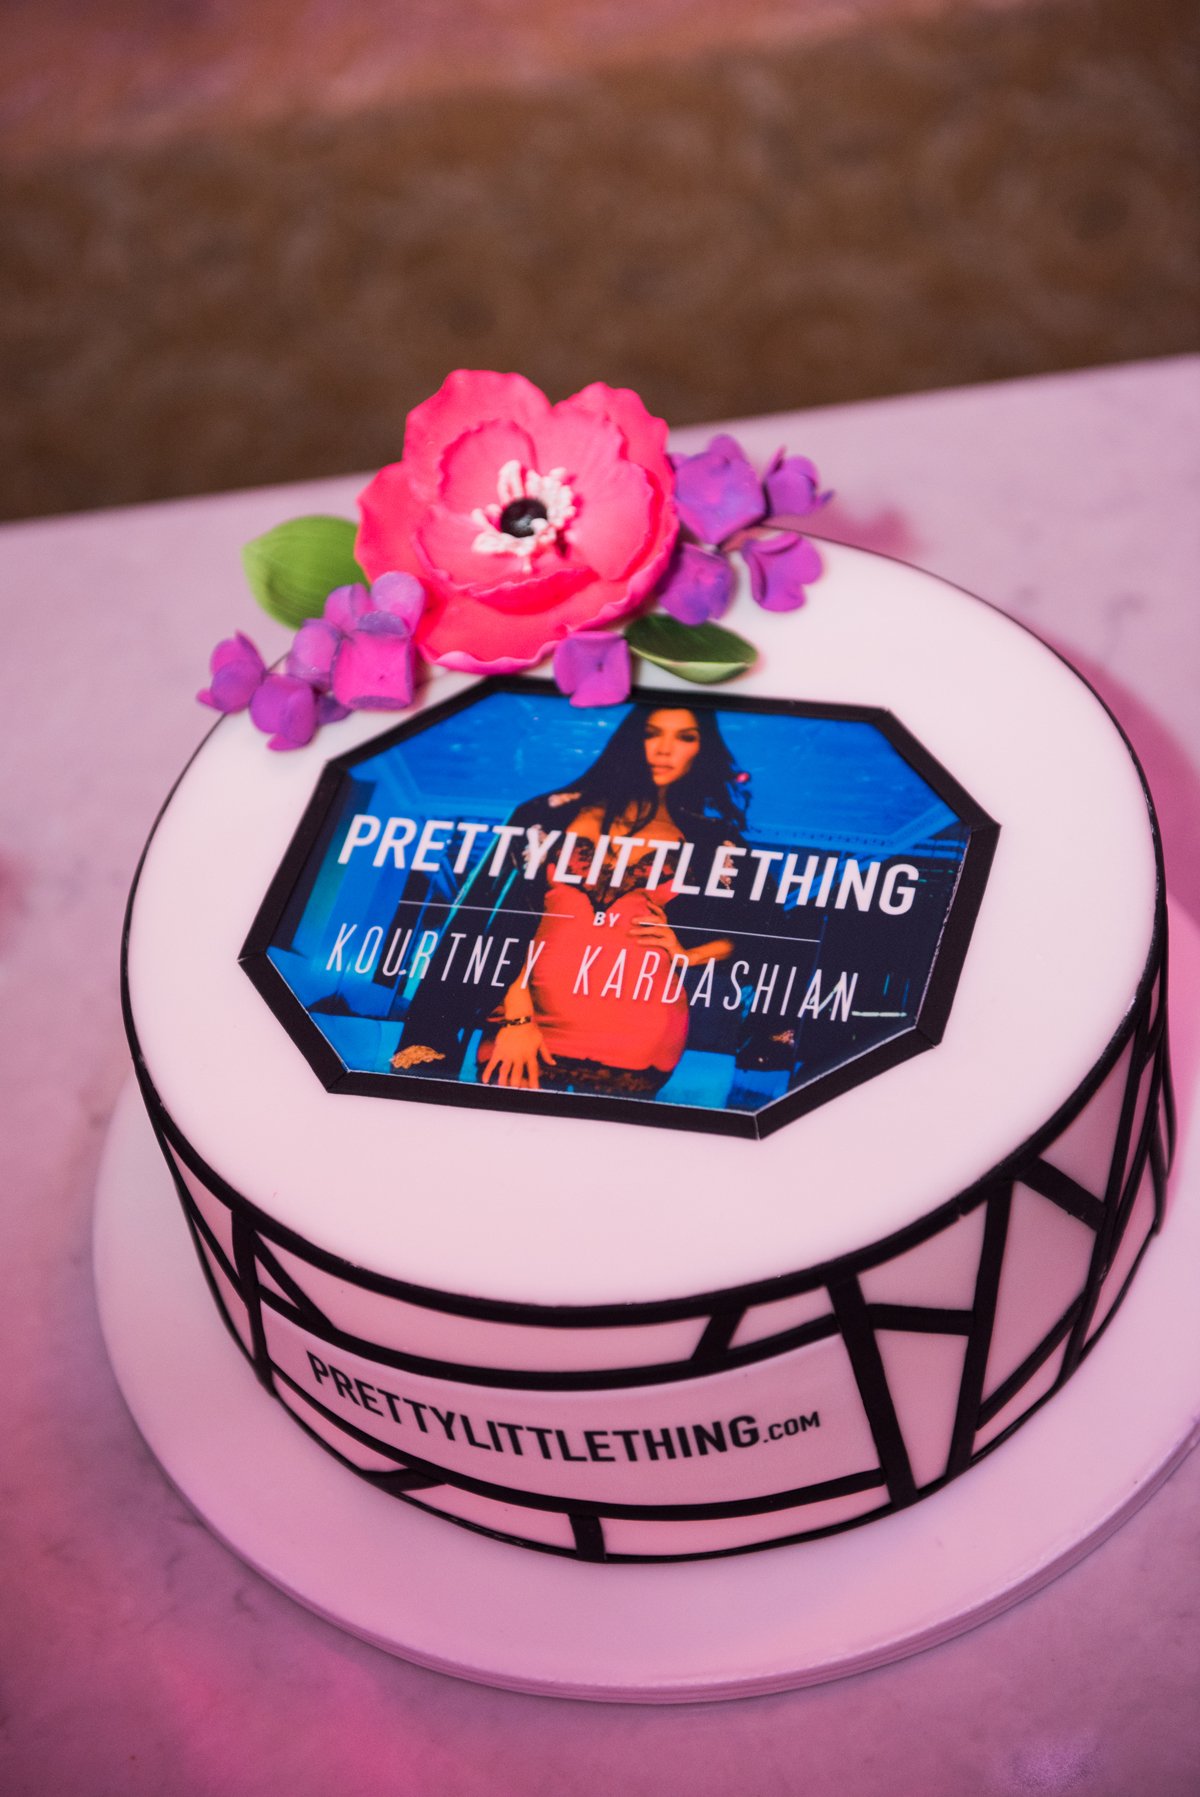 PrettyLittleThing PLT X Kourtney Kardashian Collection Celebrity Launch Party custom cake with edible topper.jpg